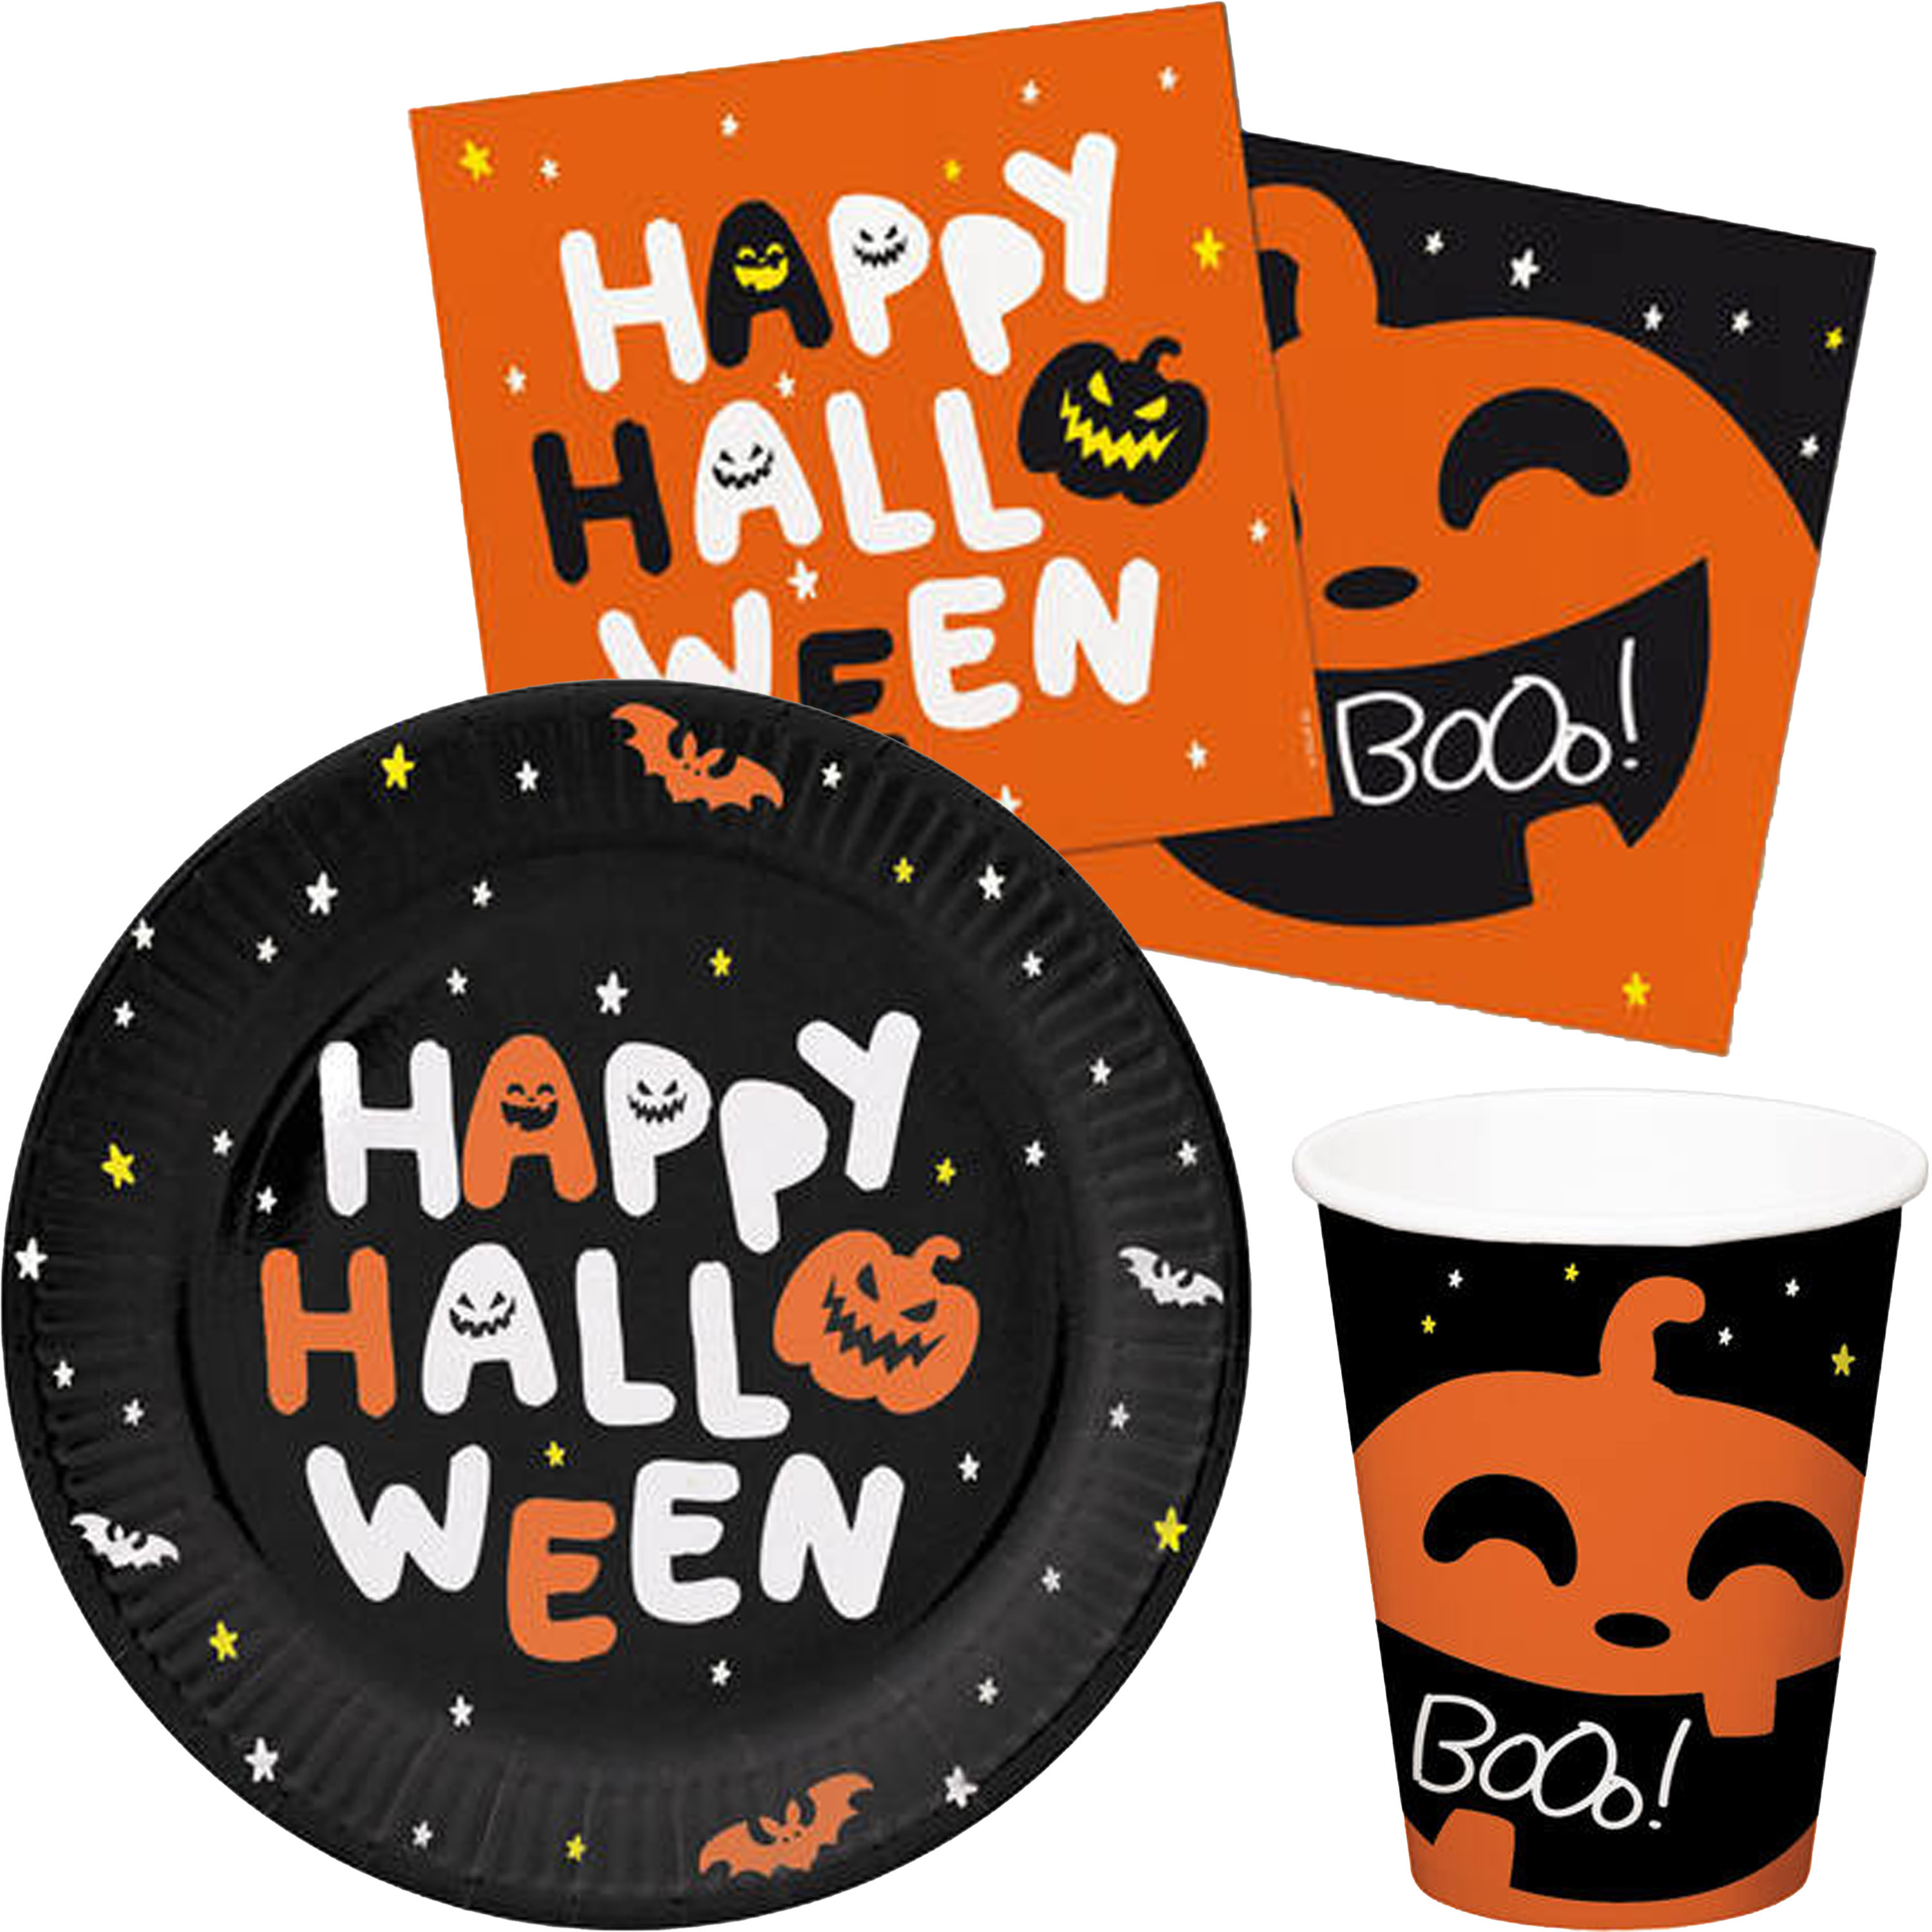 Halloween thema feest set bord/beker/servetten - 44x - pompoen BoOo print - papier